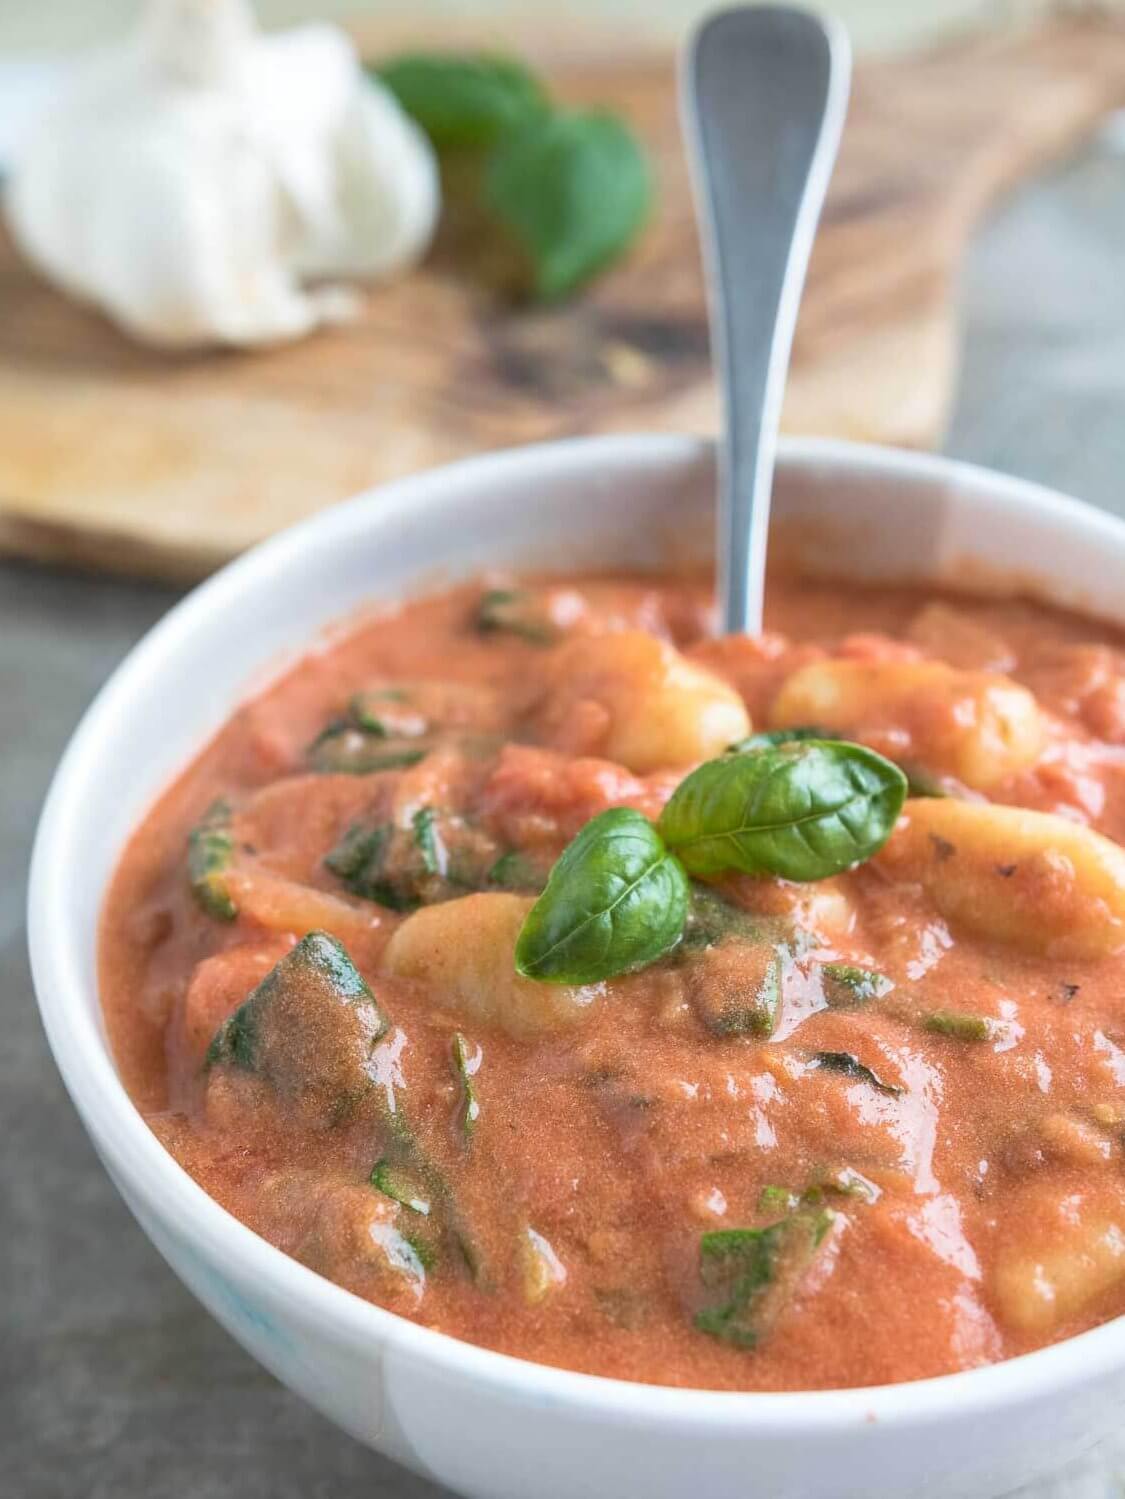 creamy tomato gnocchi soup made with San Marzano tomatoes